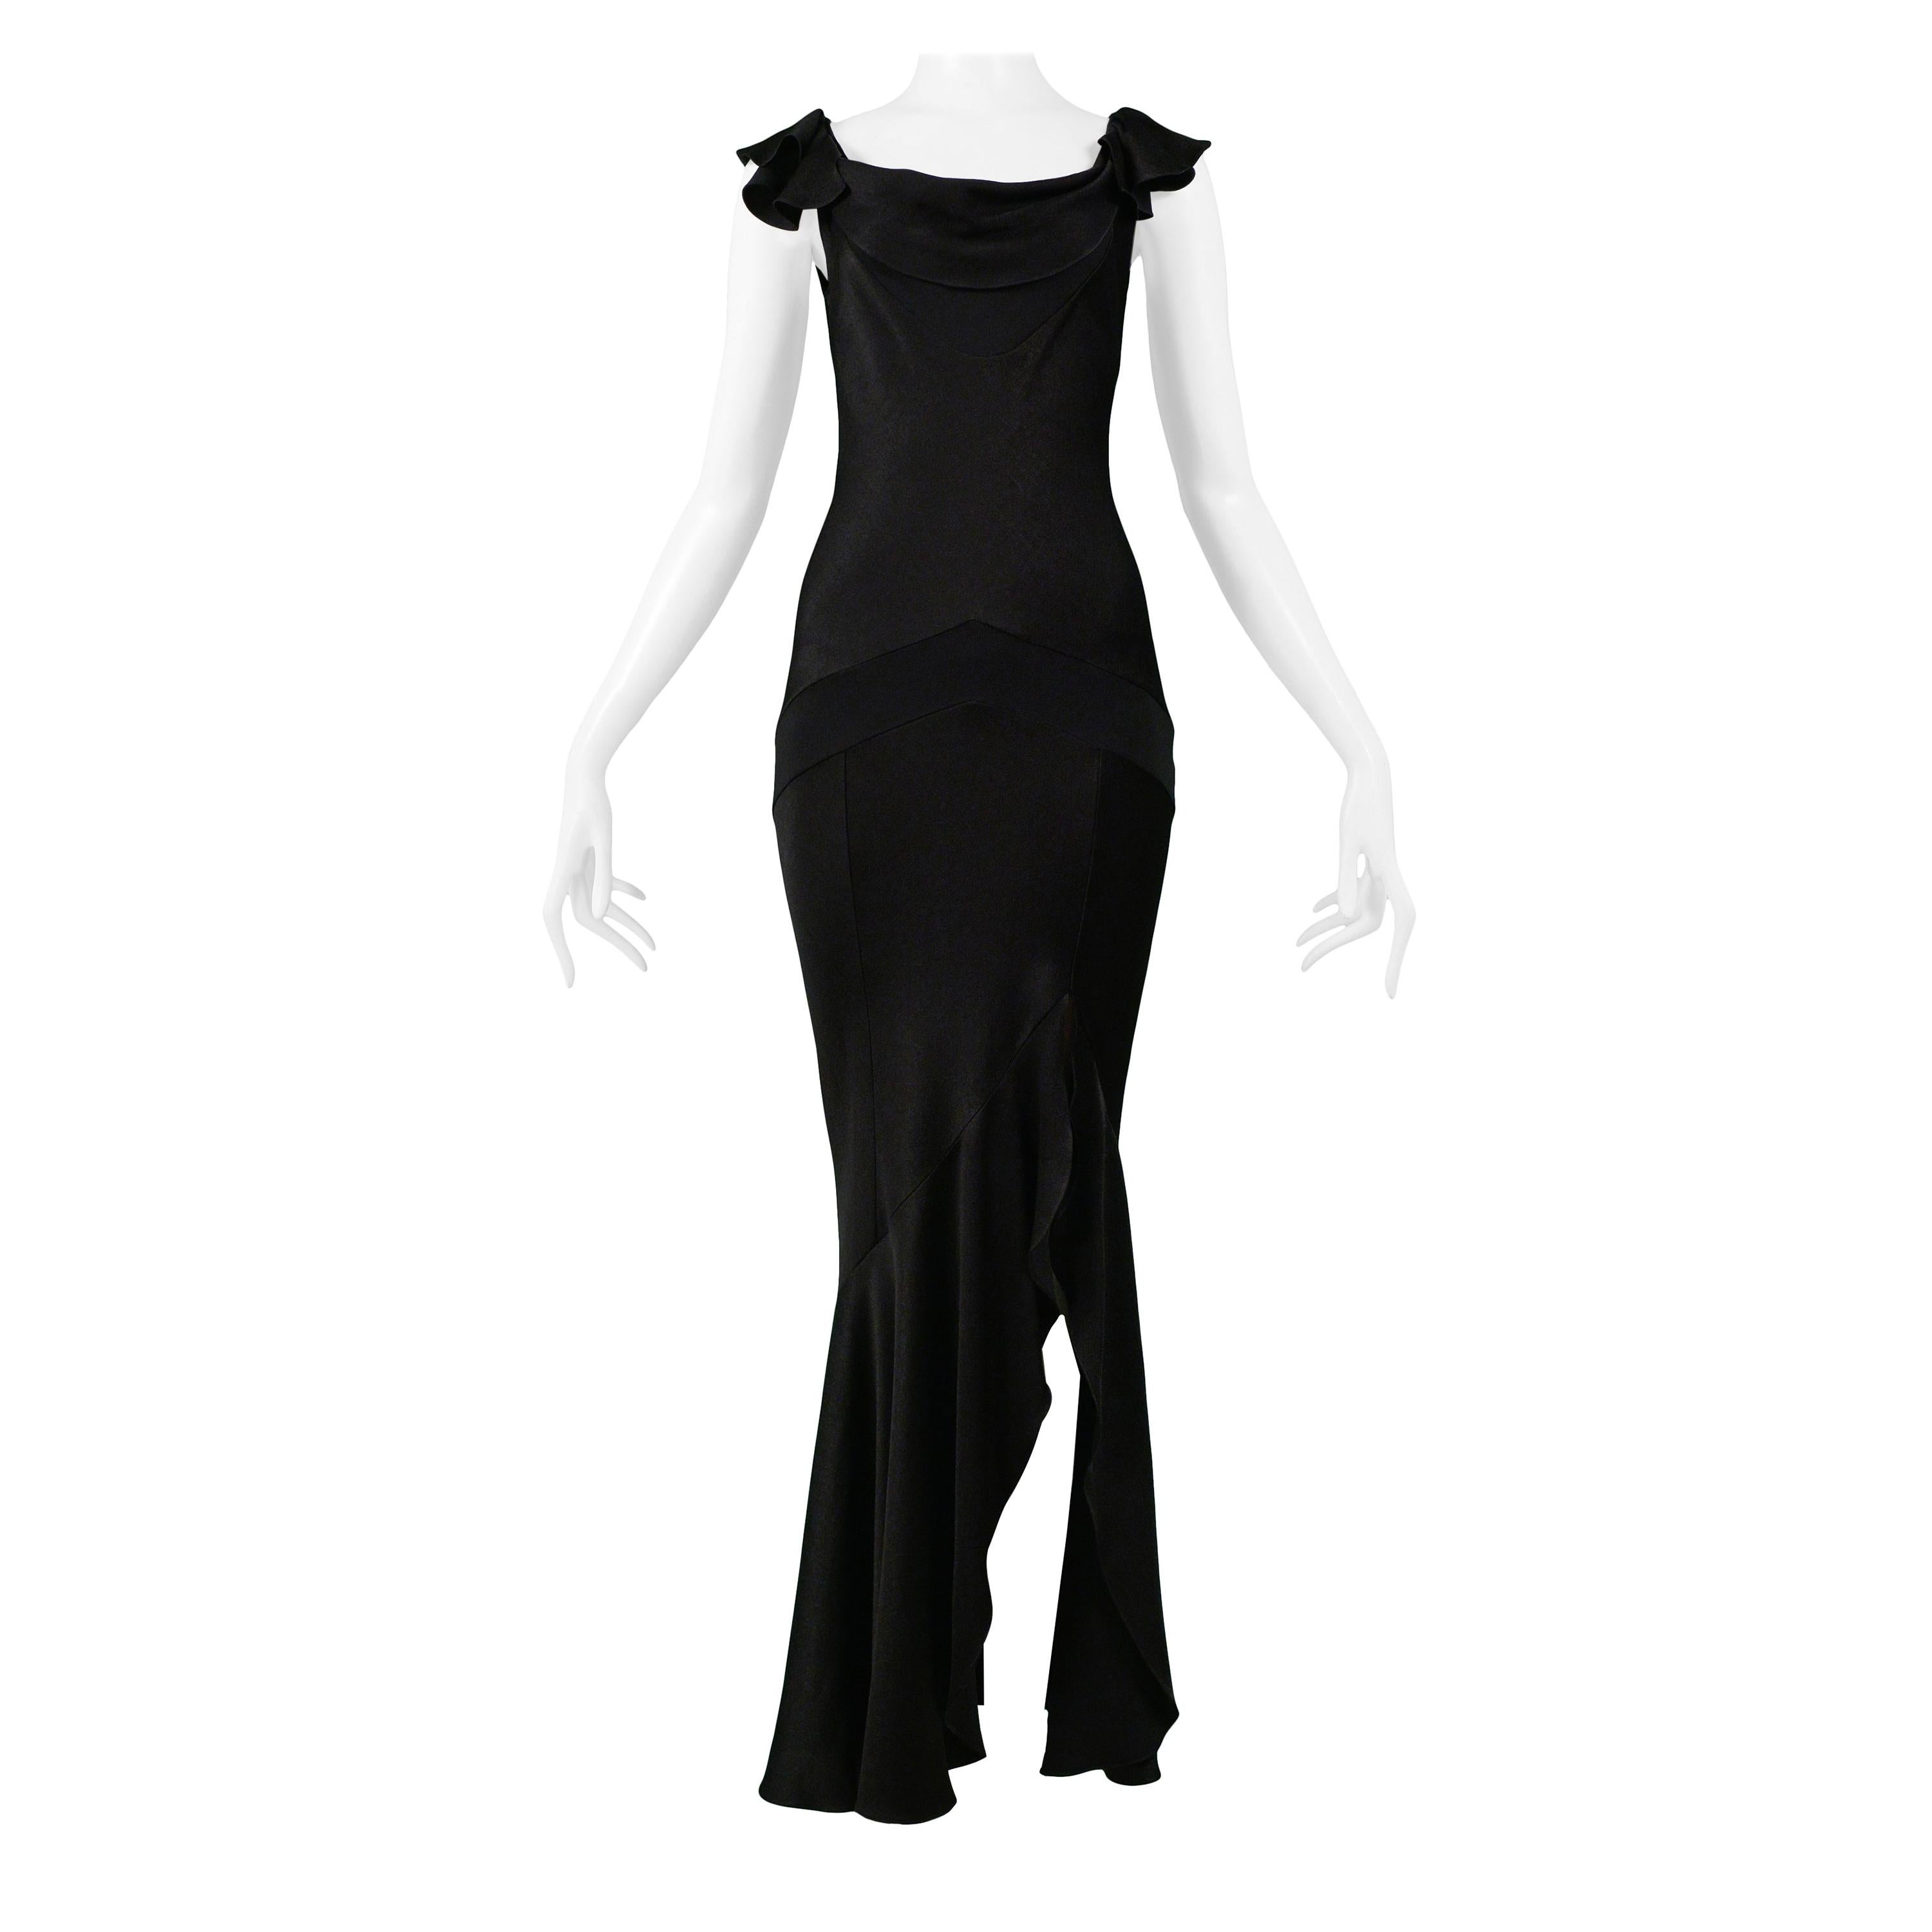 Phoebe WallerBridges Black Dior Critics Choice Dress  POPSUGAR Fashion  Middle East